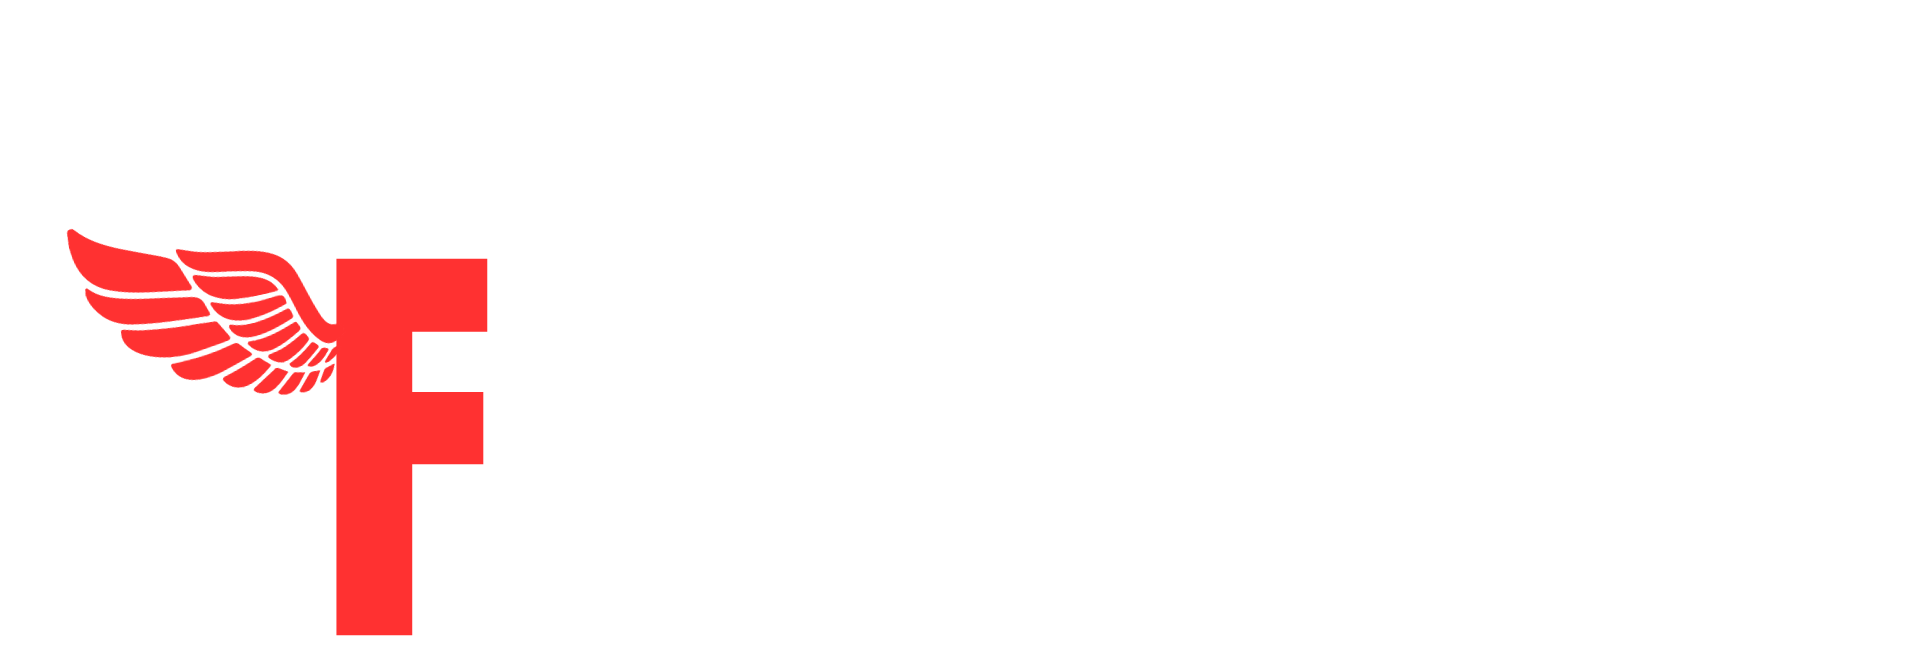 le-blog-des-femmes